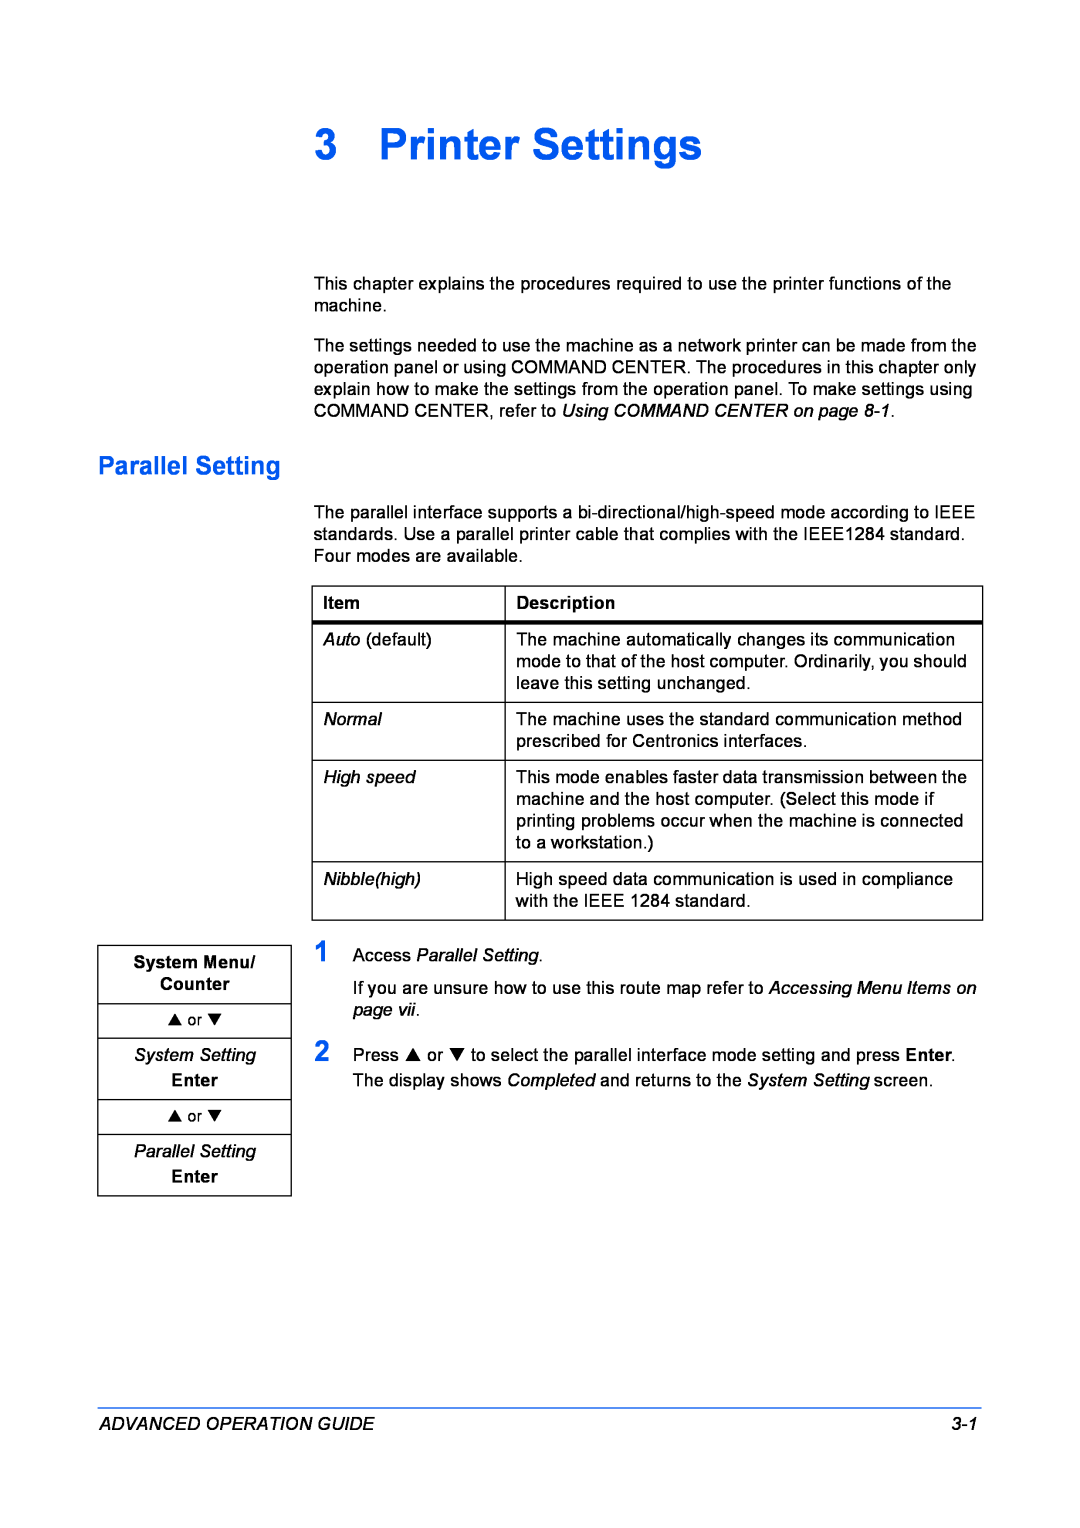 Kyocera KM-1820 manual Printer Settings, Parallel Setting, Description 